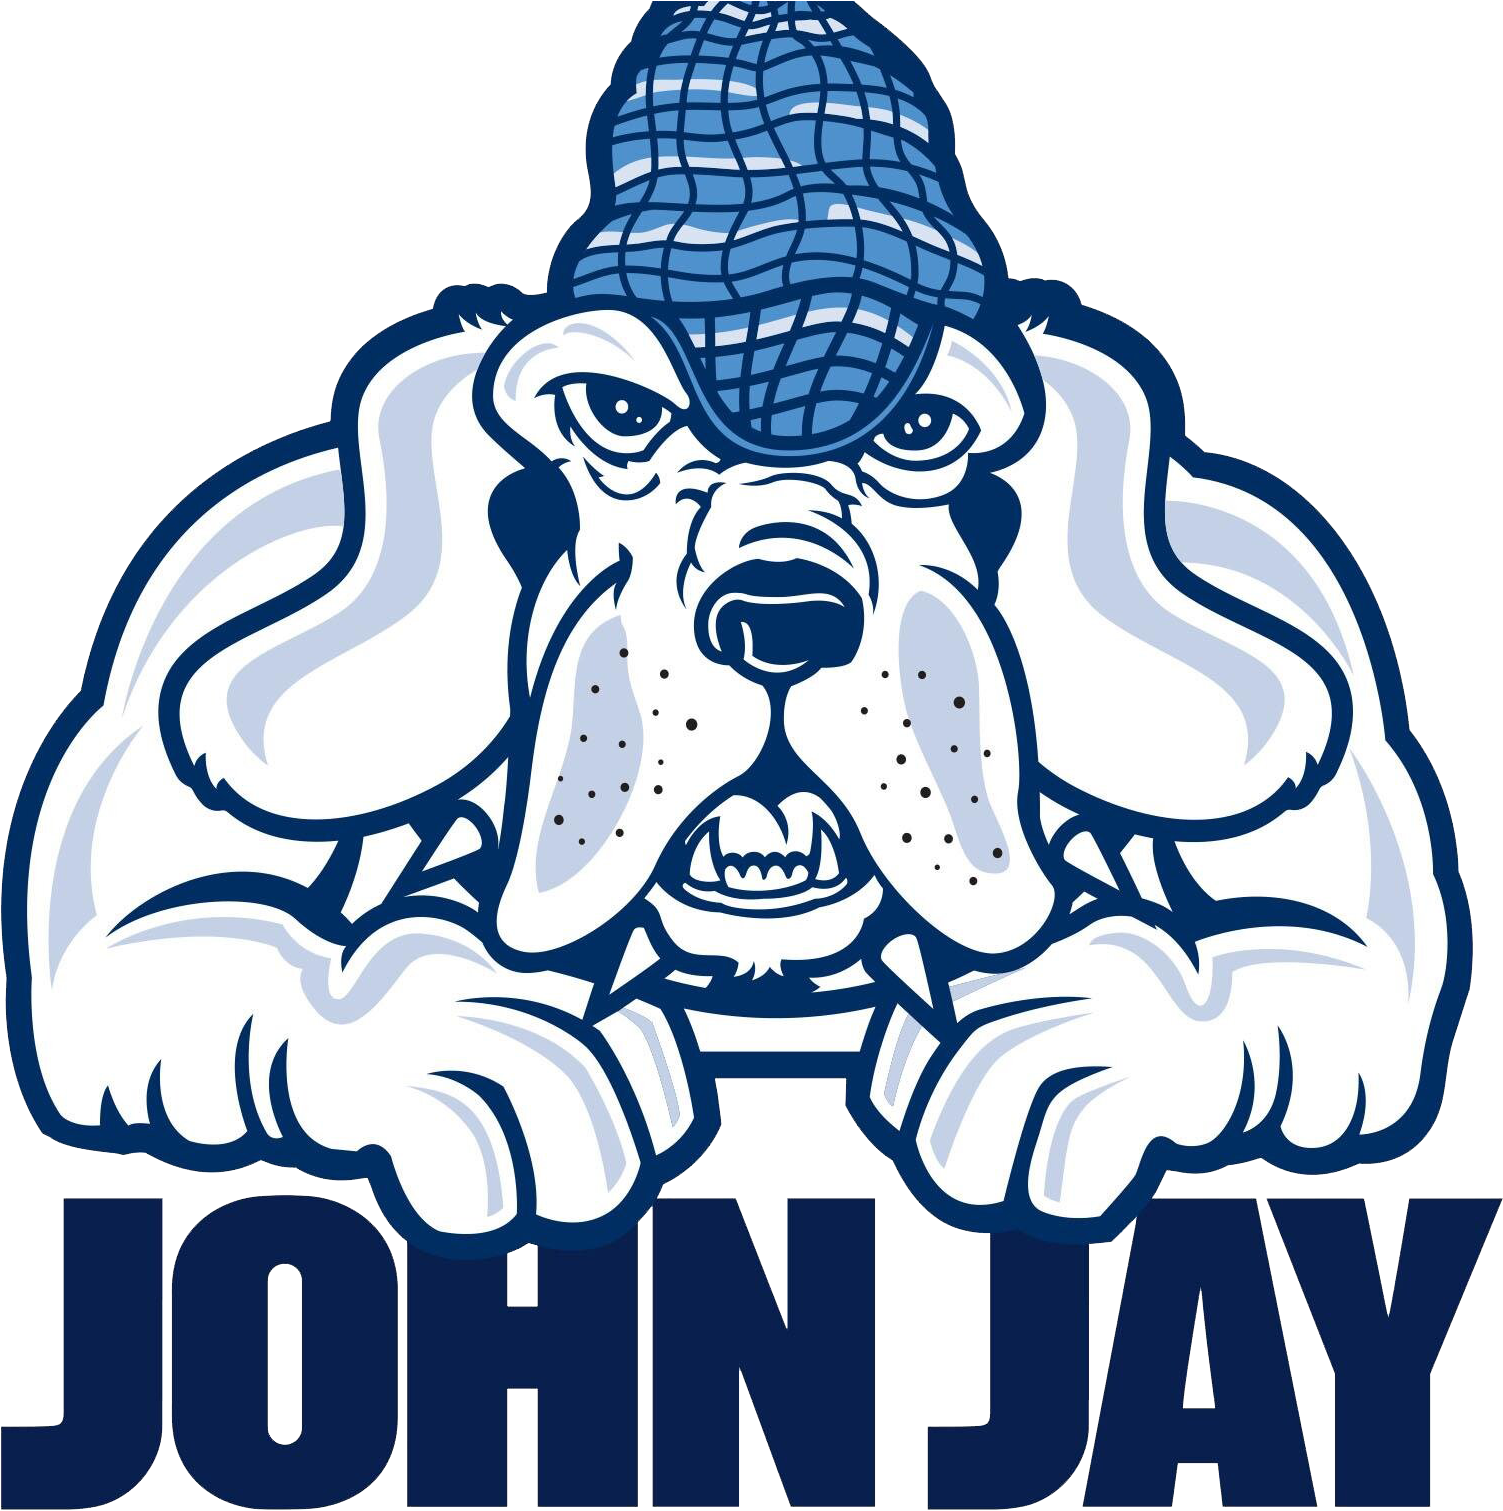 John Jay Baseball Scores, Results, Schedule, Roster - John Jay College Mascot (1510x1510)